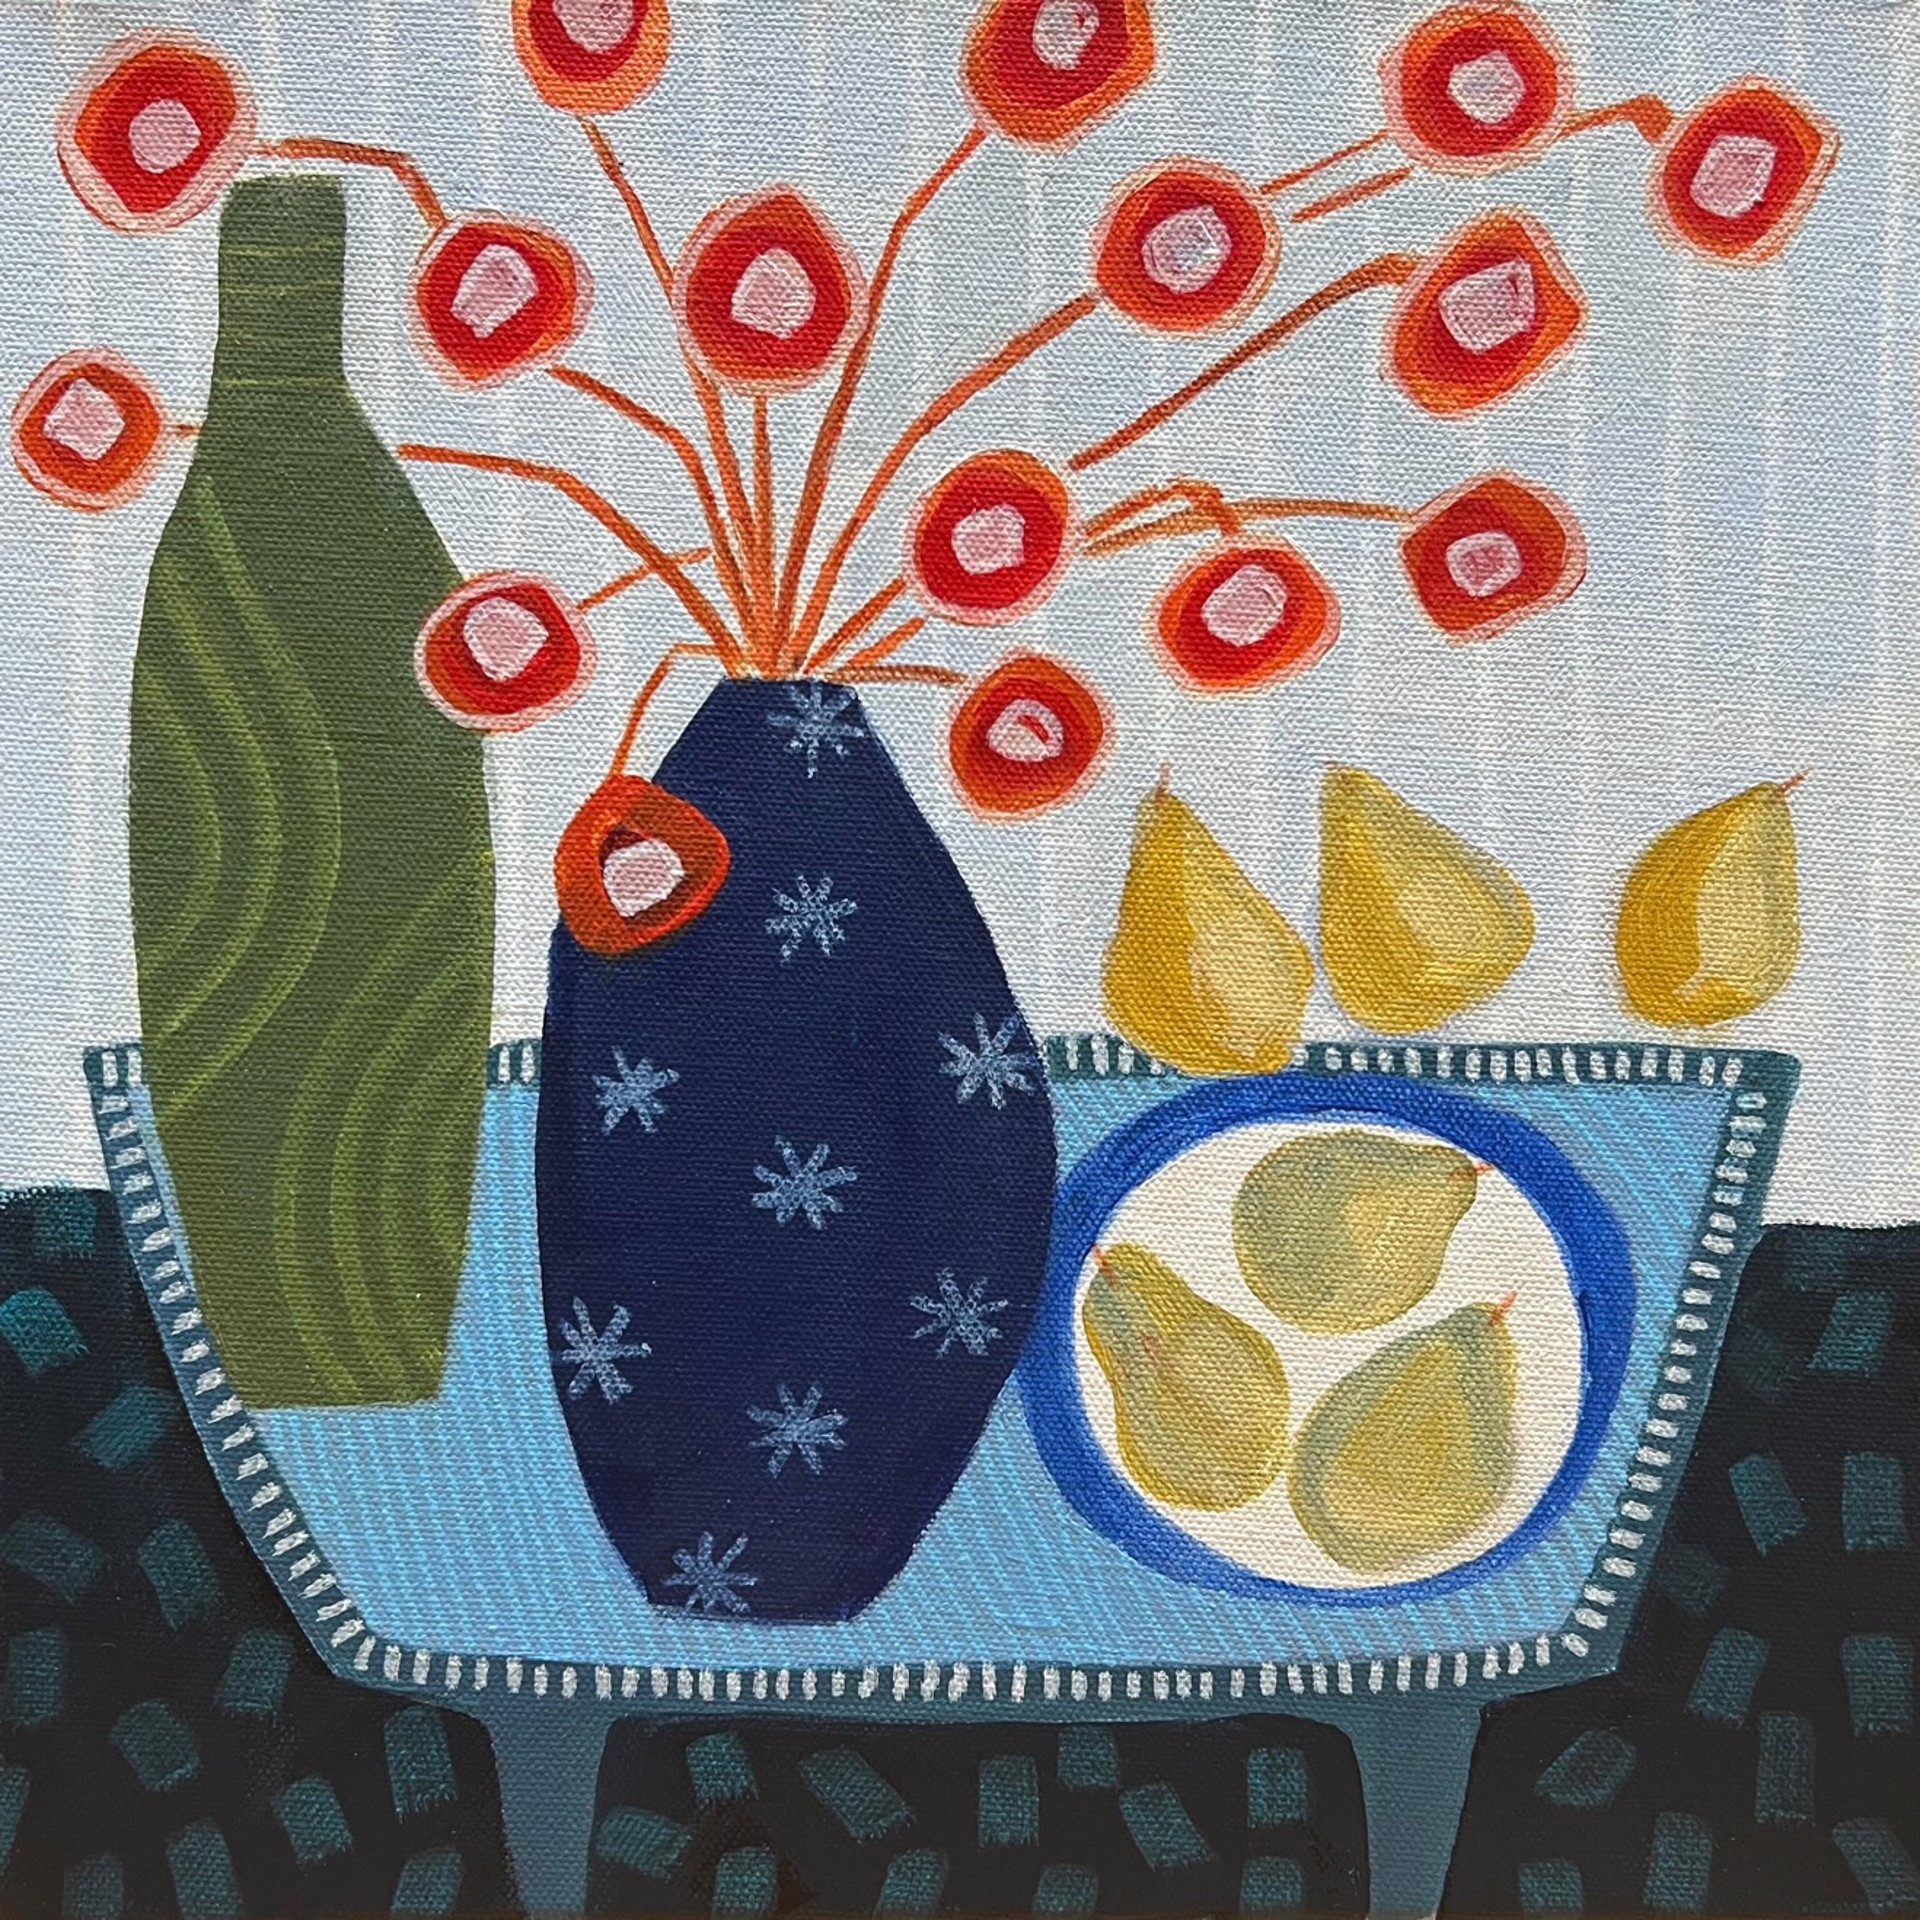 Many Pears by Joyce Grasso